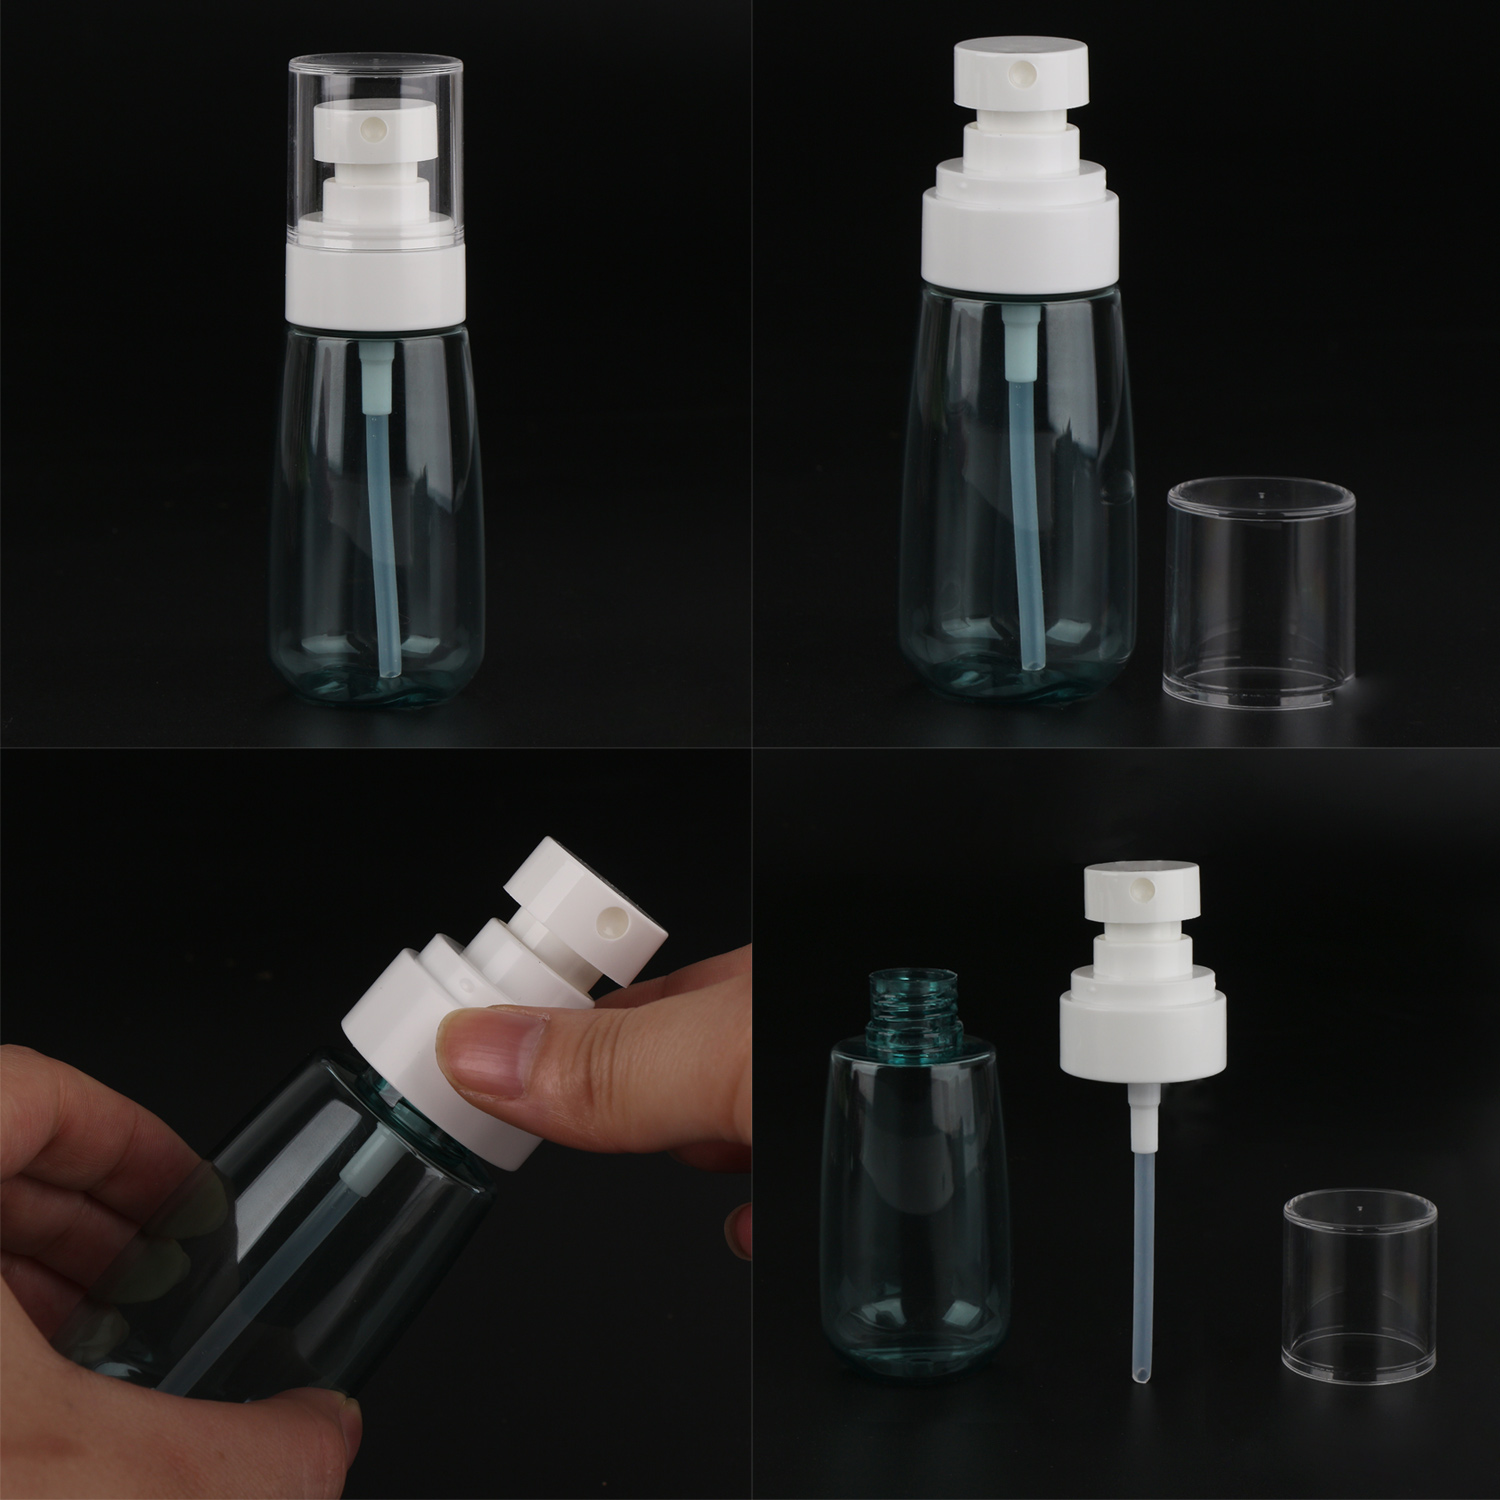 Craft and Party- 12 Pcs 60ml Clear Plastic Travel Size Spray Bottles, Fine Mist Mini Spray Bottle Refillable., Size: 60ml (2oz)